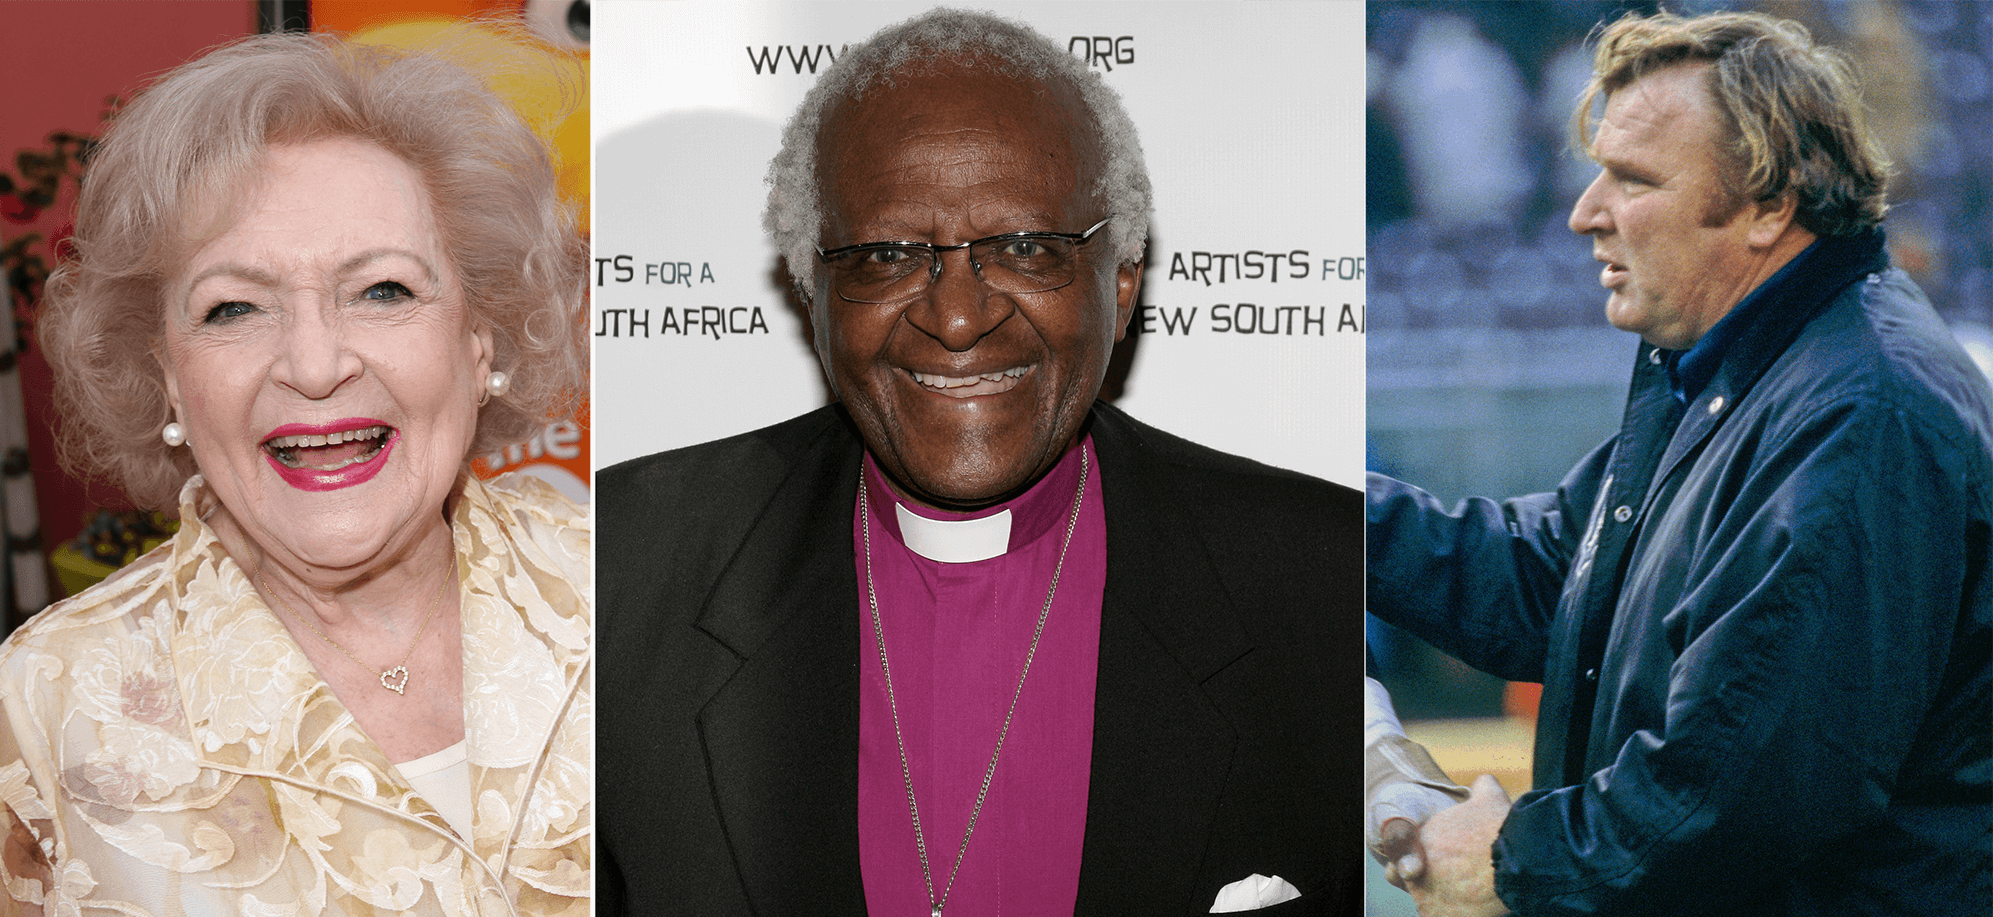 Betty White, Desmond Tutu, and John Madden